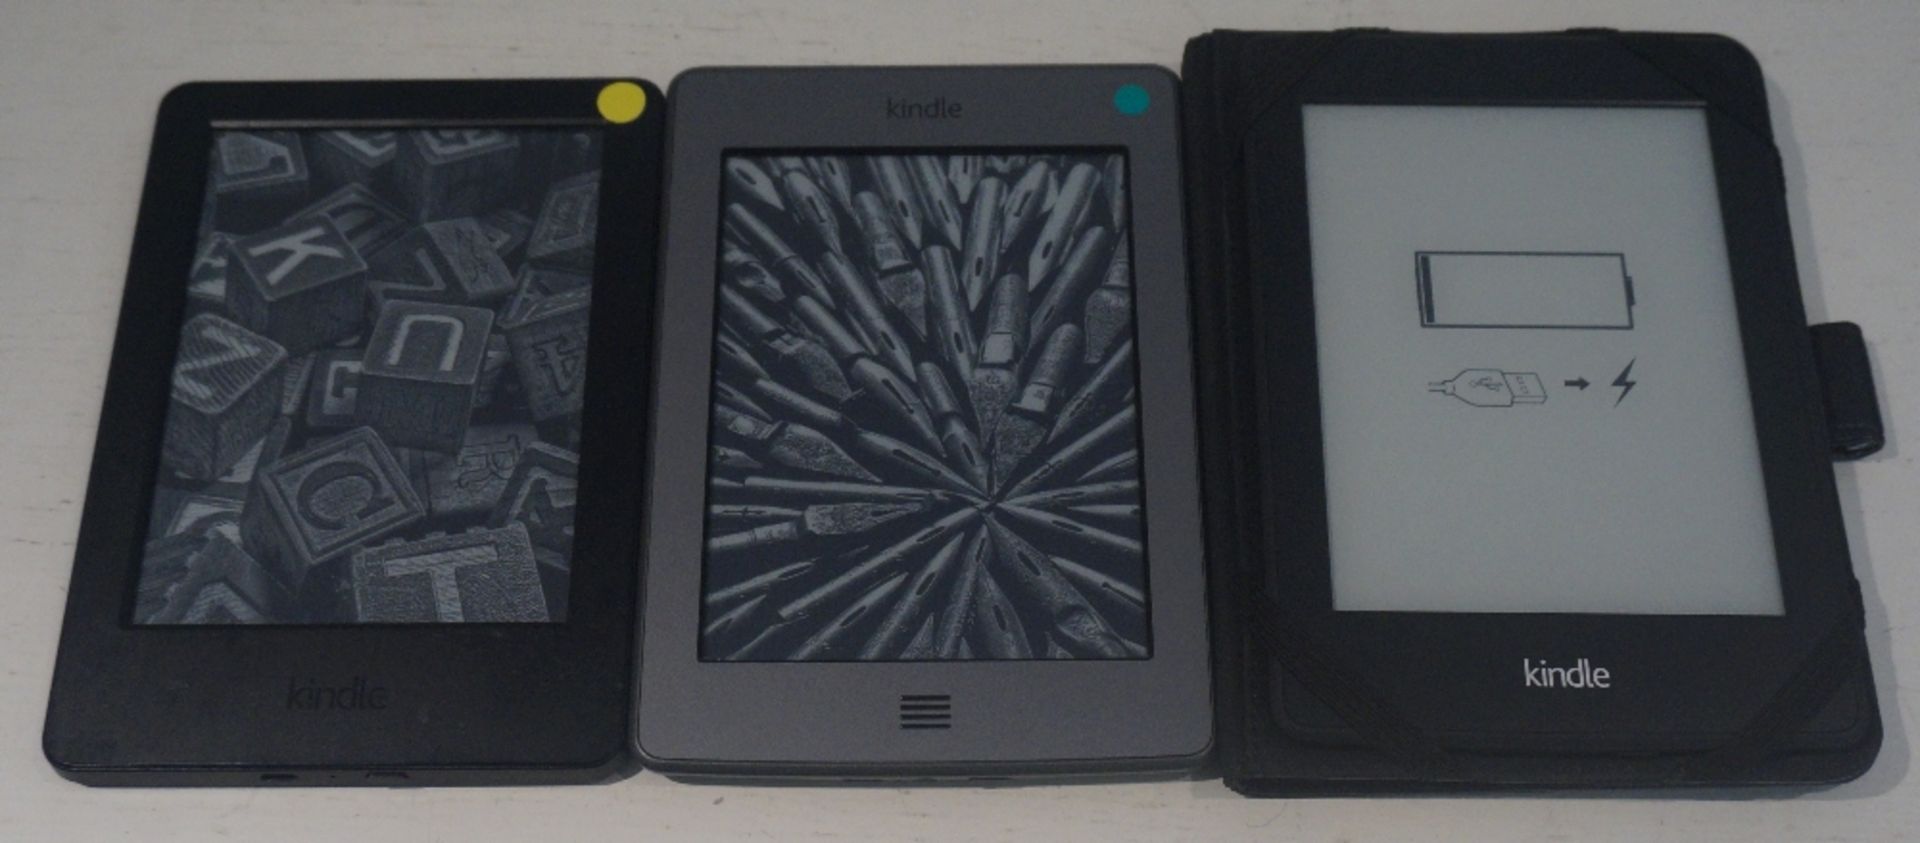 THREE KINDLES
comprising Kindle Basic (2014) serial number 90C6 0606 4367 0232,